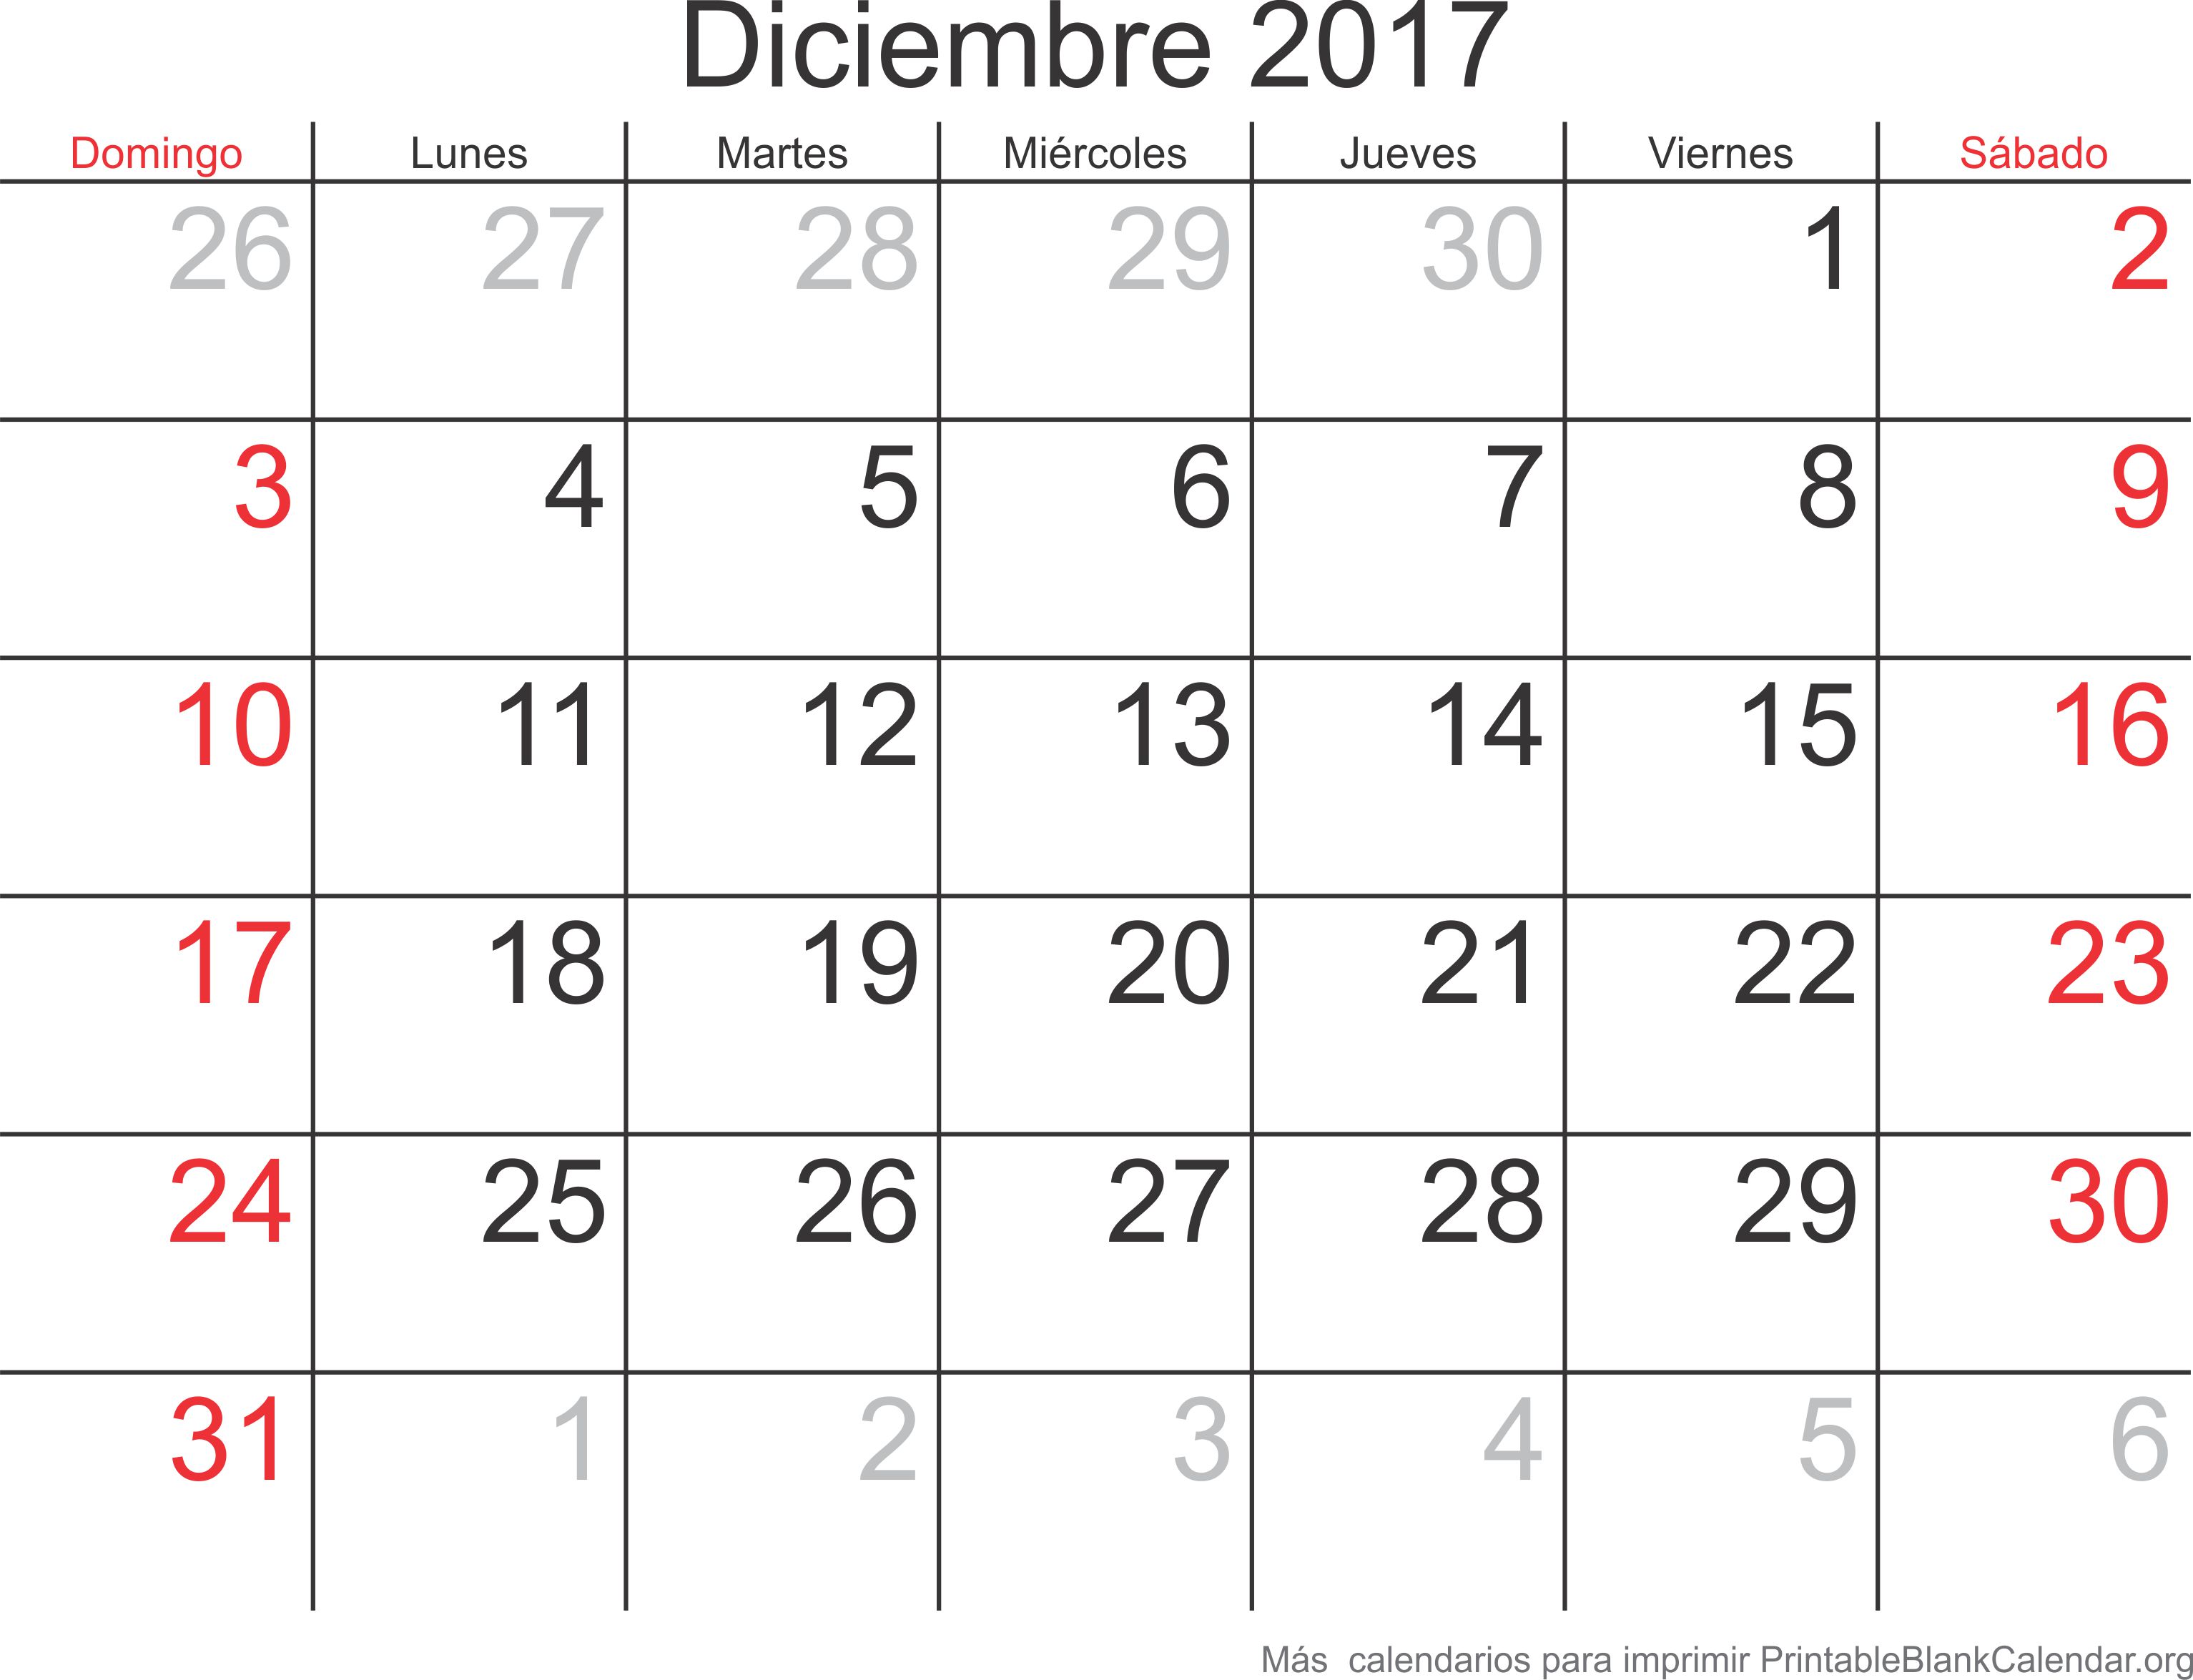 deciembre 2017 agenda